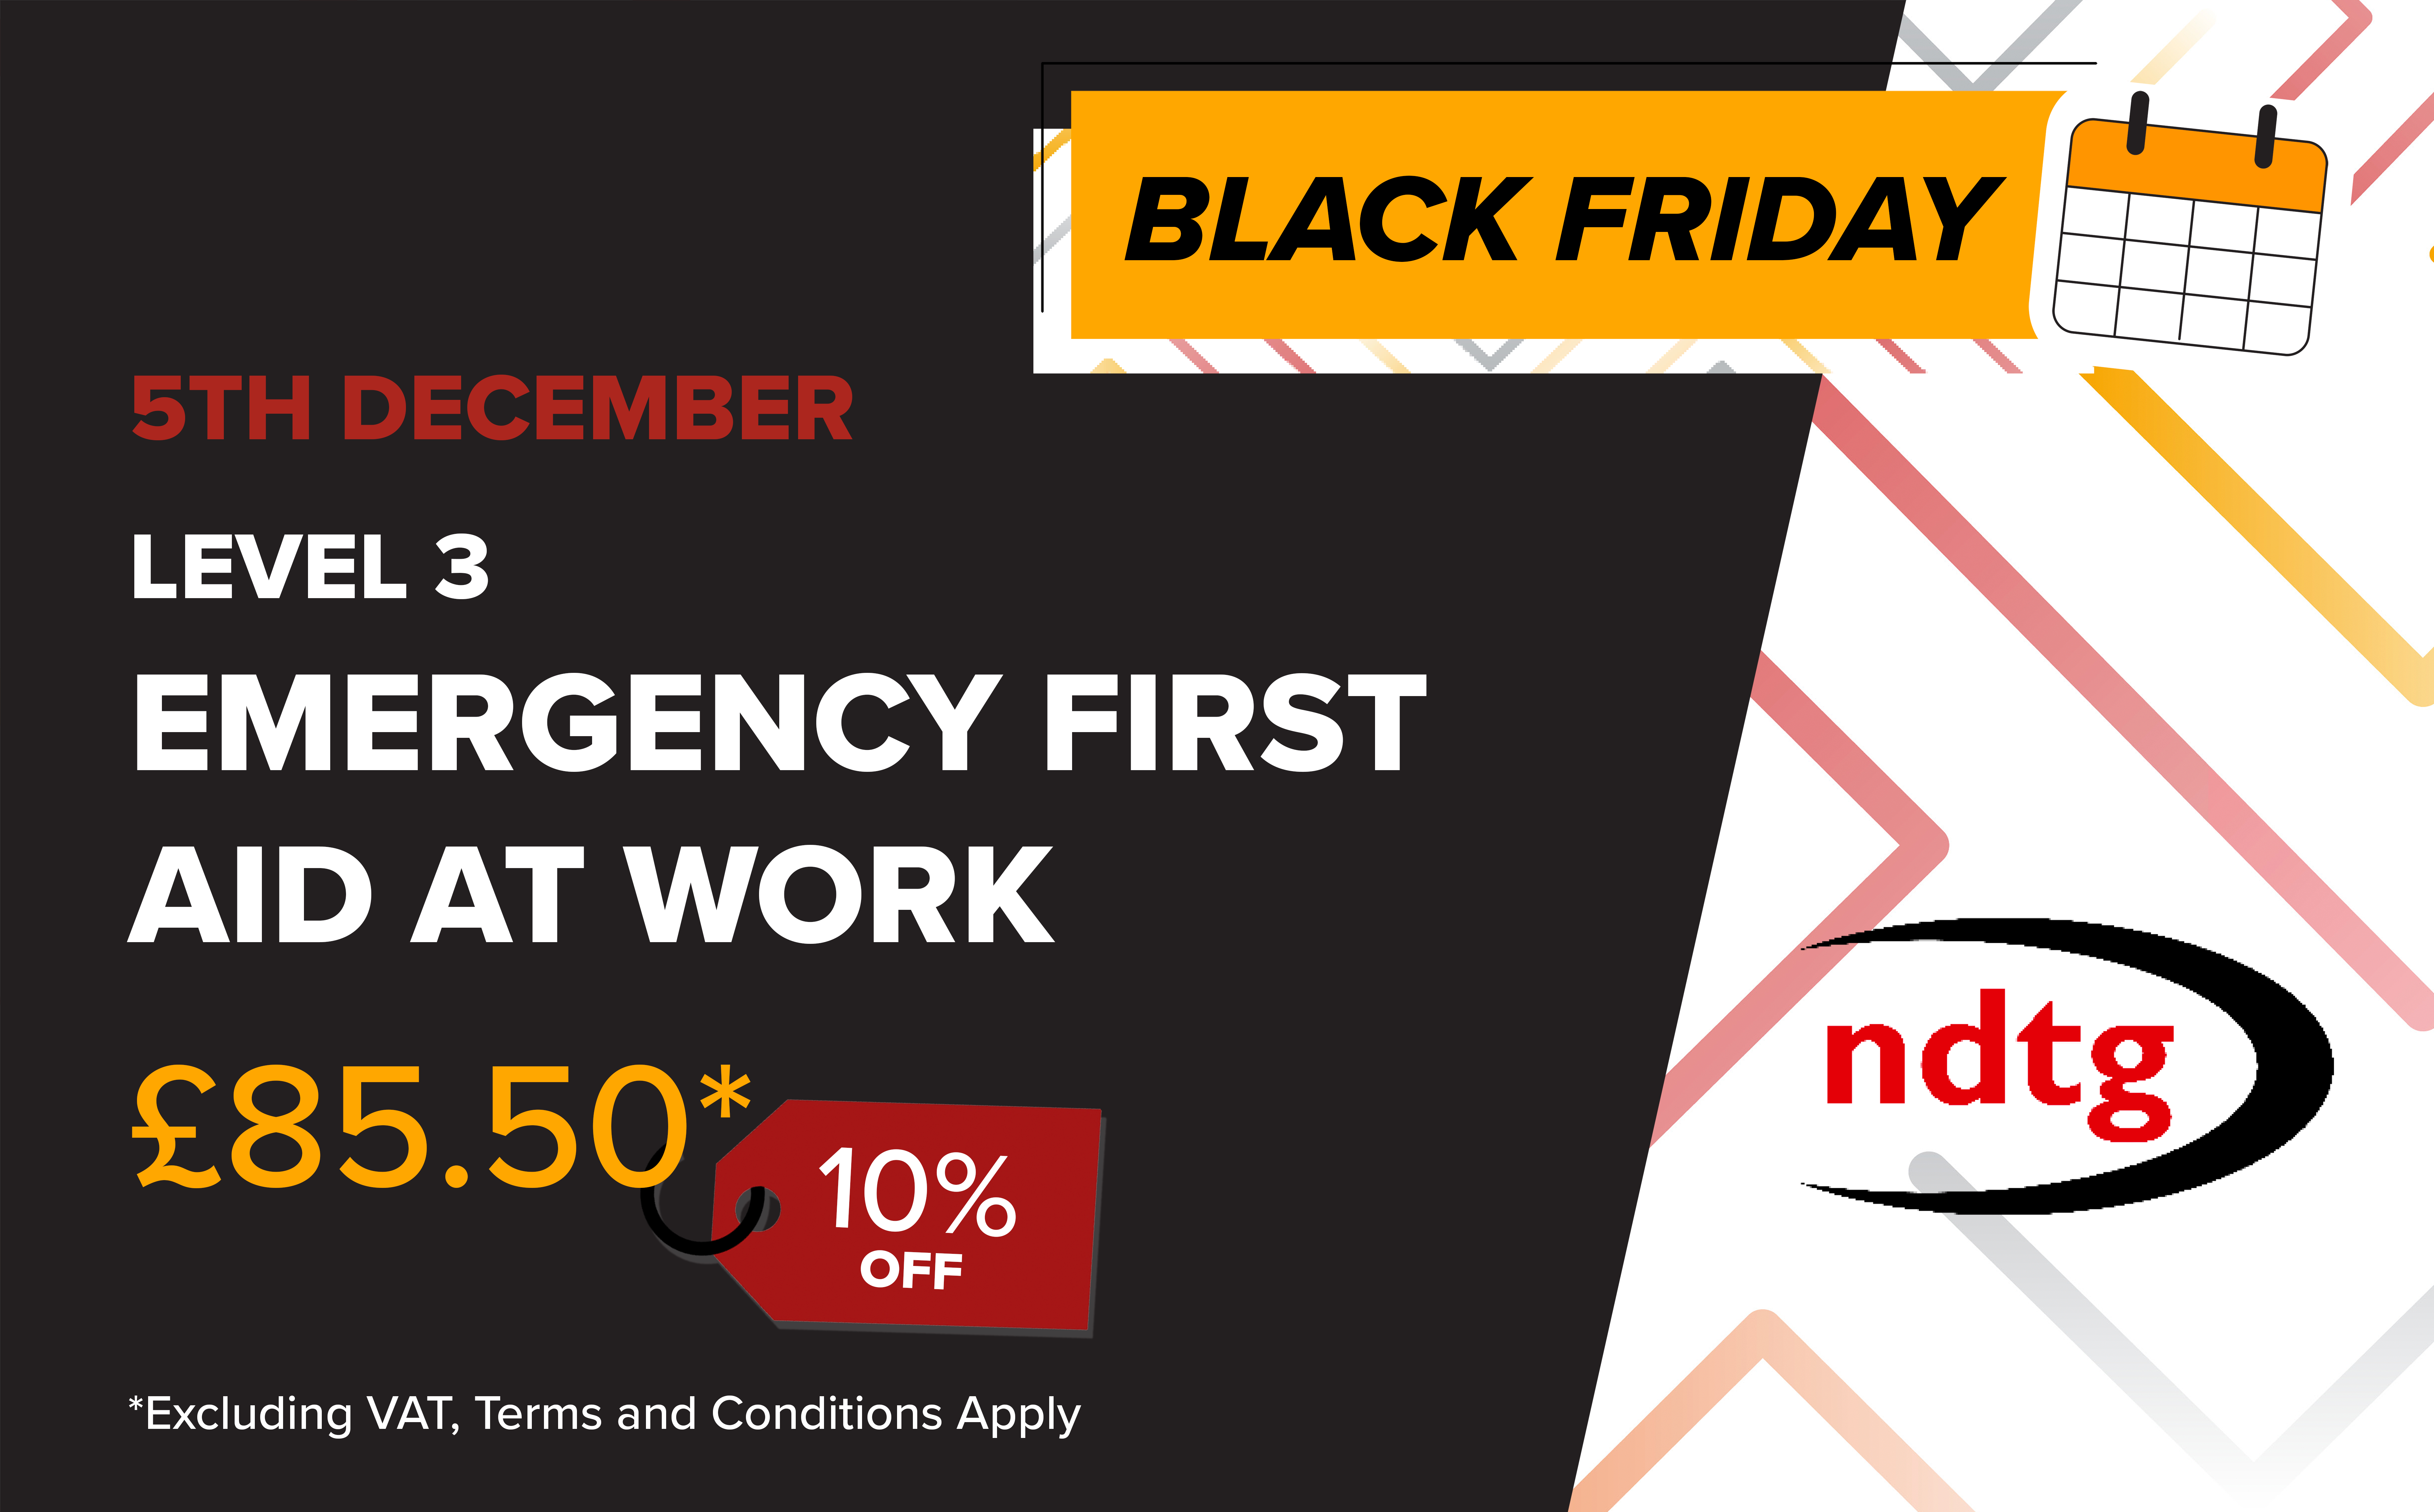 Black Friday: Emergency First Aid at Work